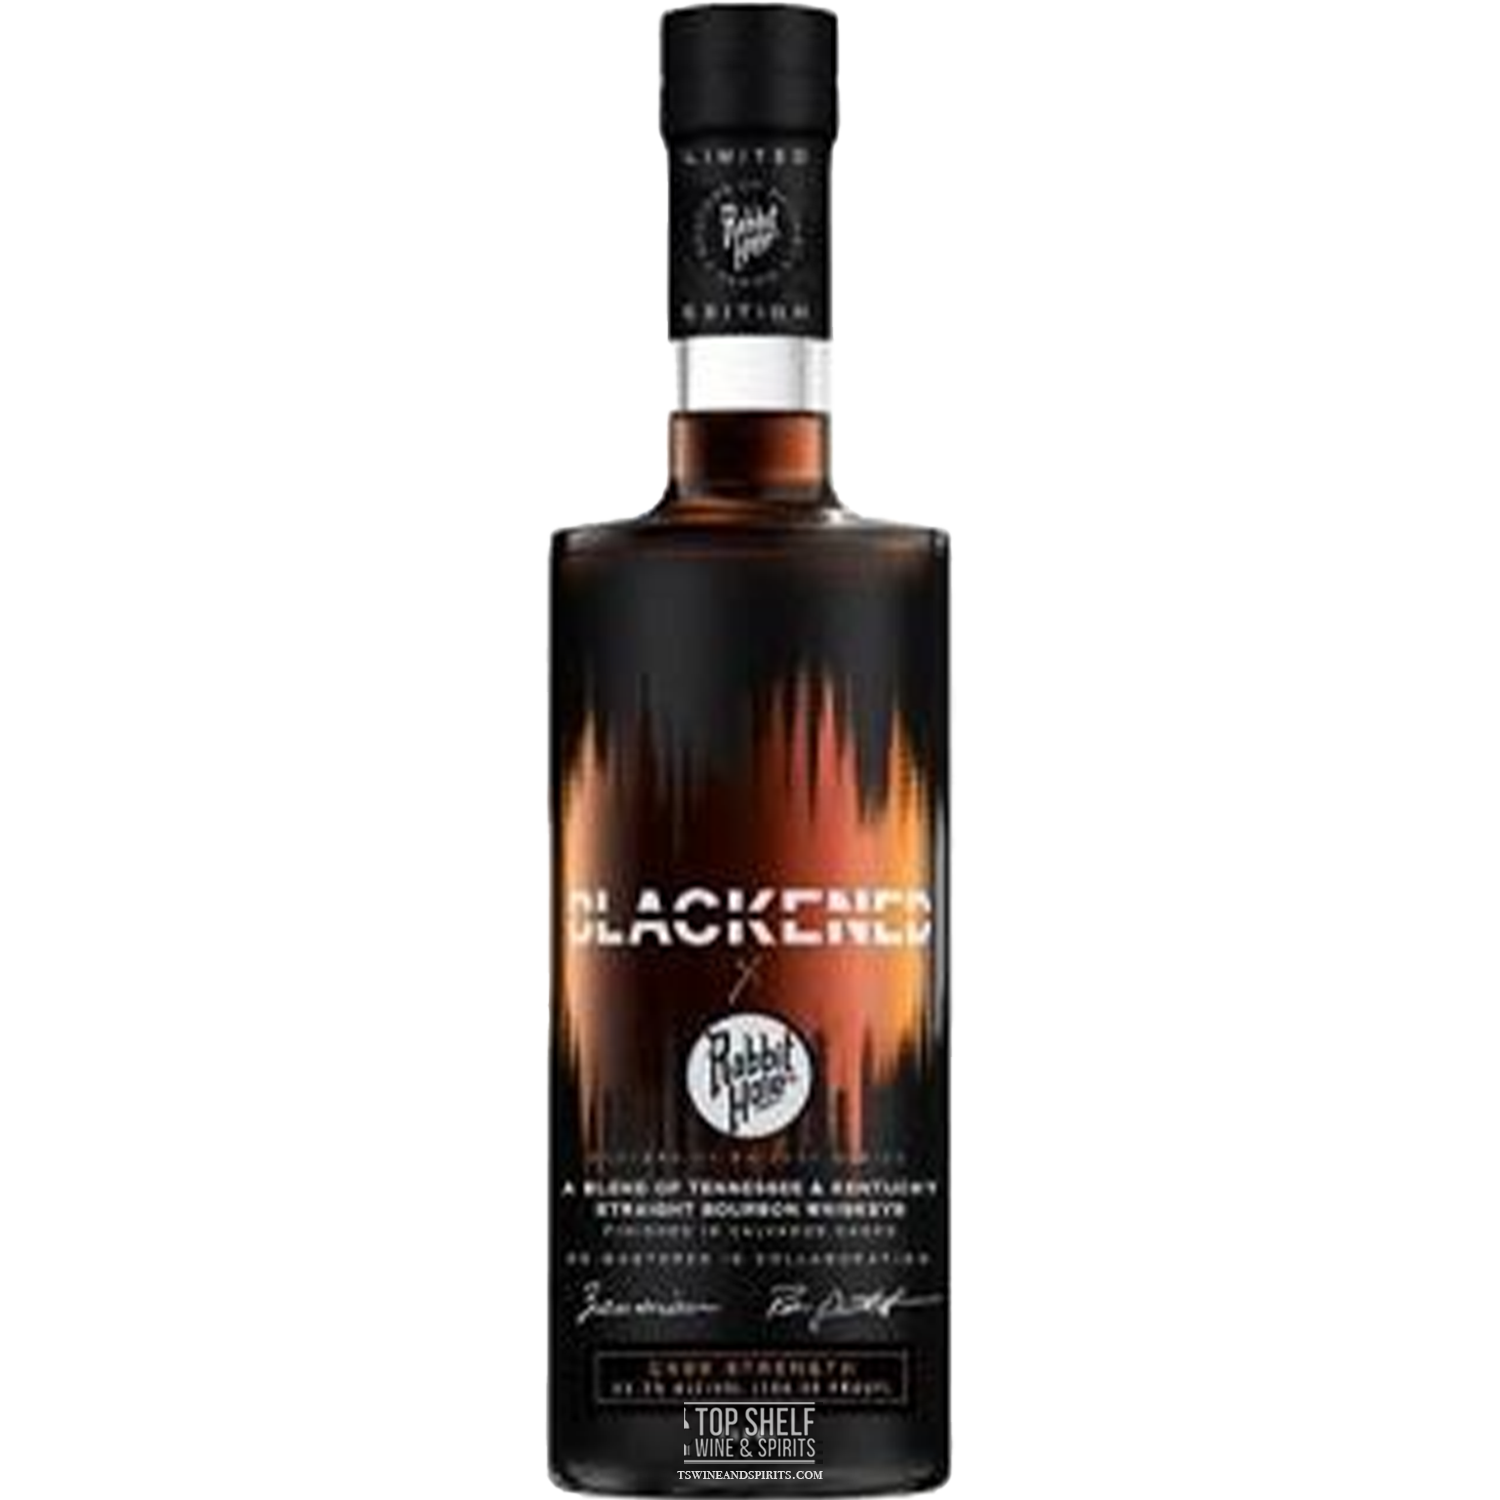 Blackened Rabbit Hole Edition Cask Strength Bourbon